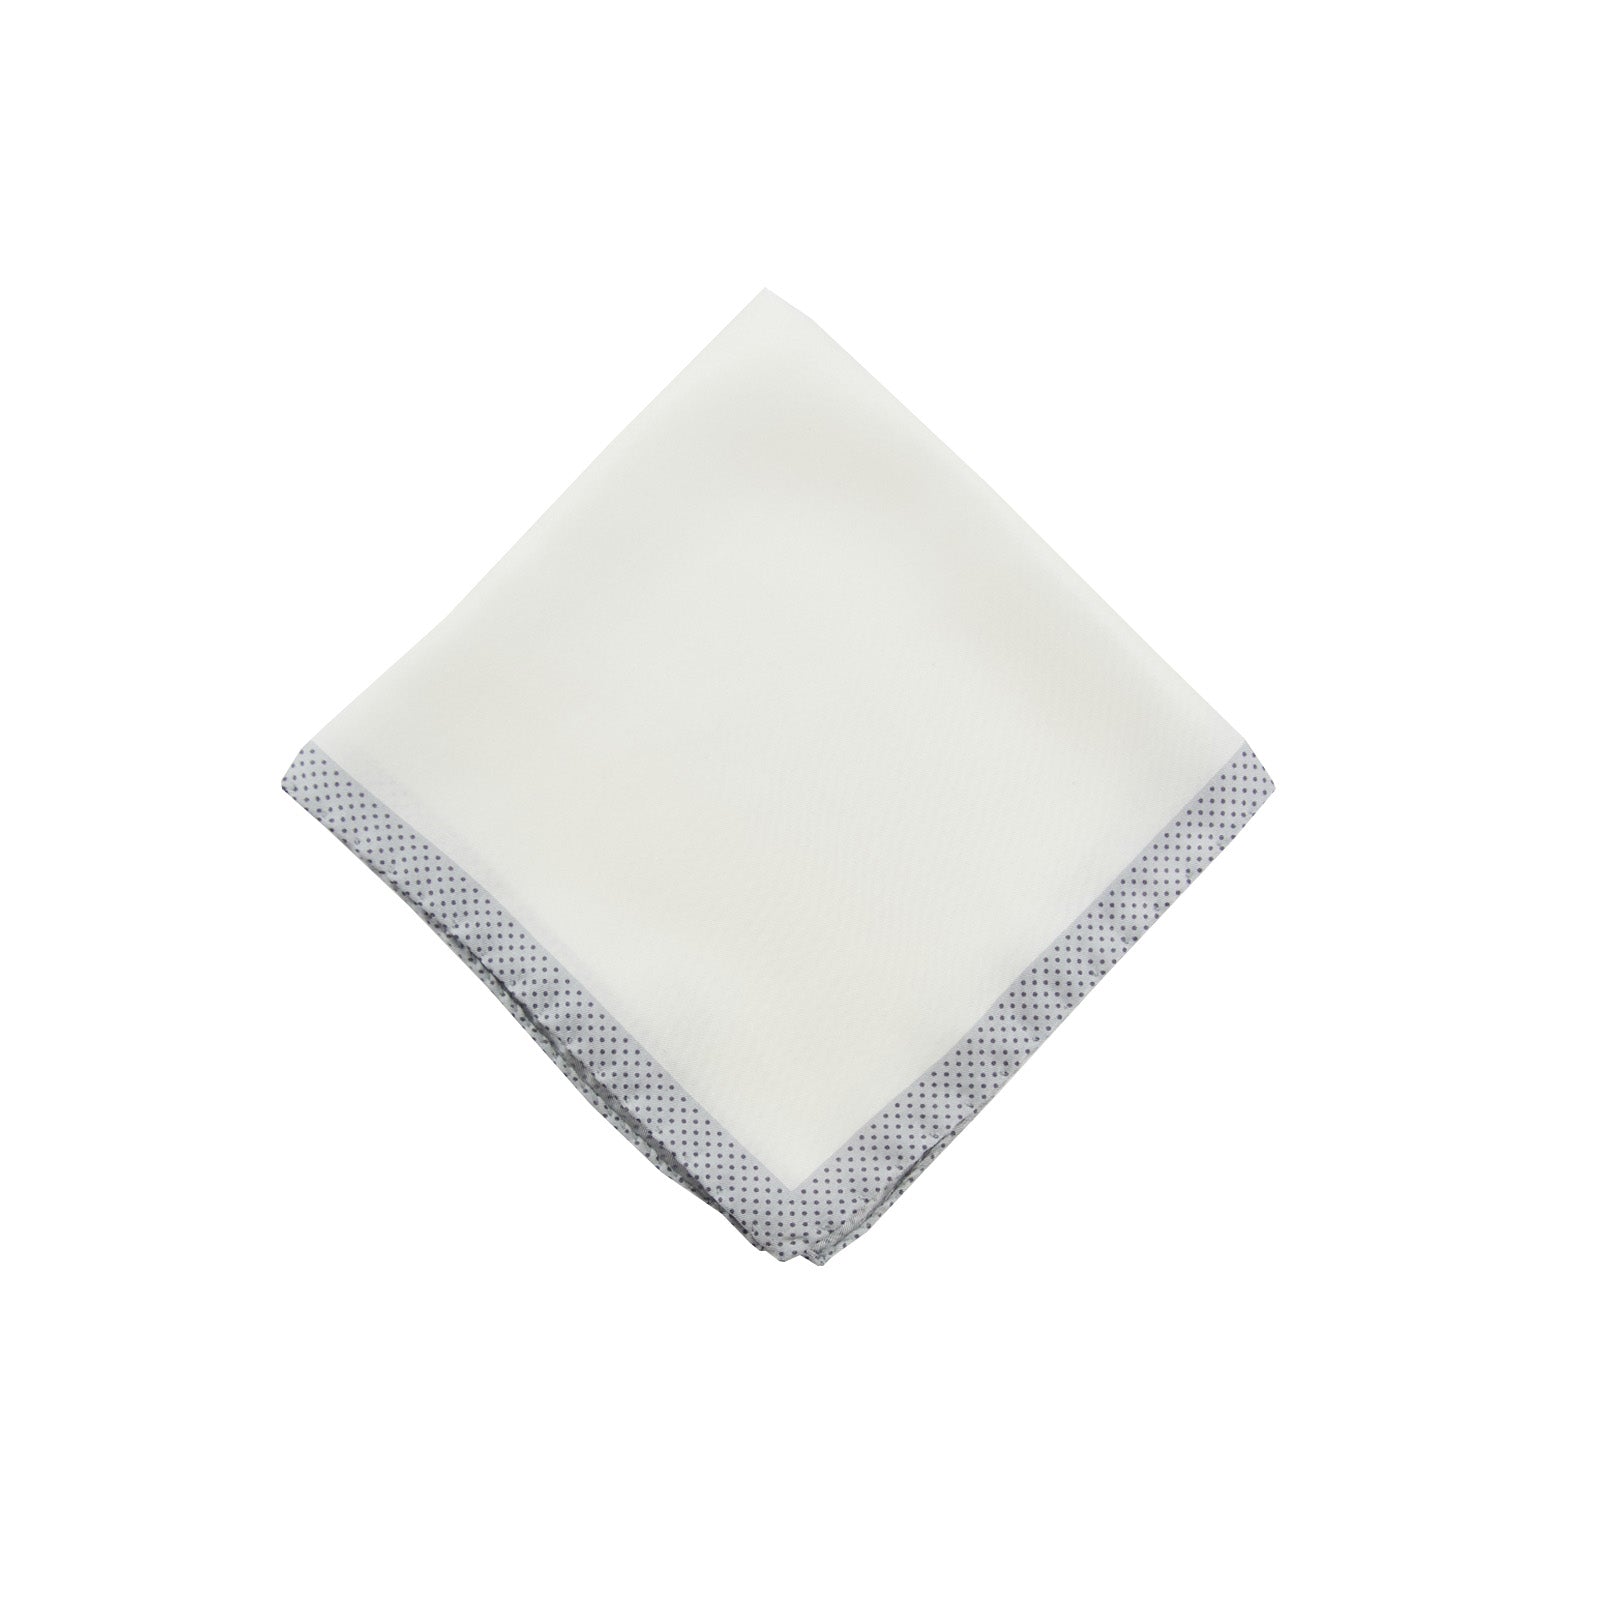 White solid pocket square - 14219-71478 - Hammer Made